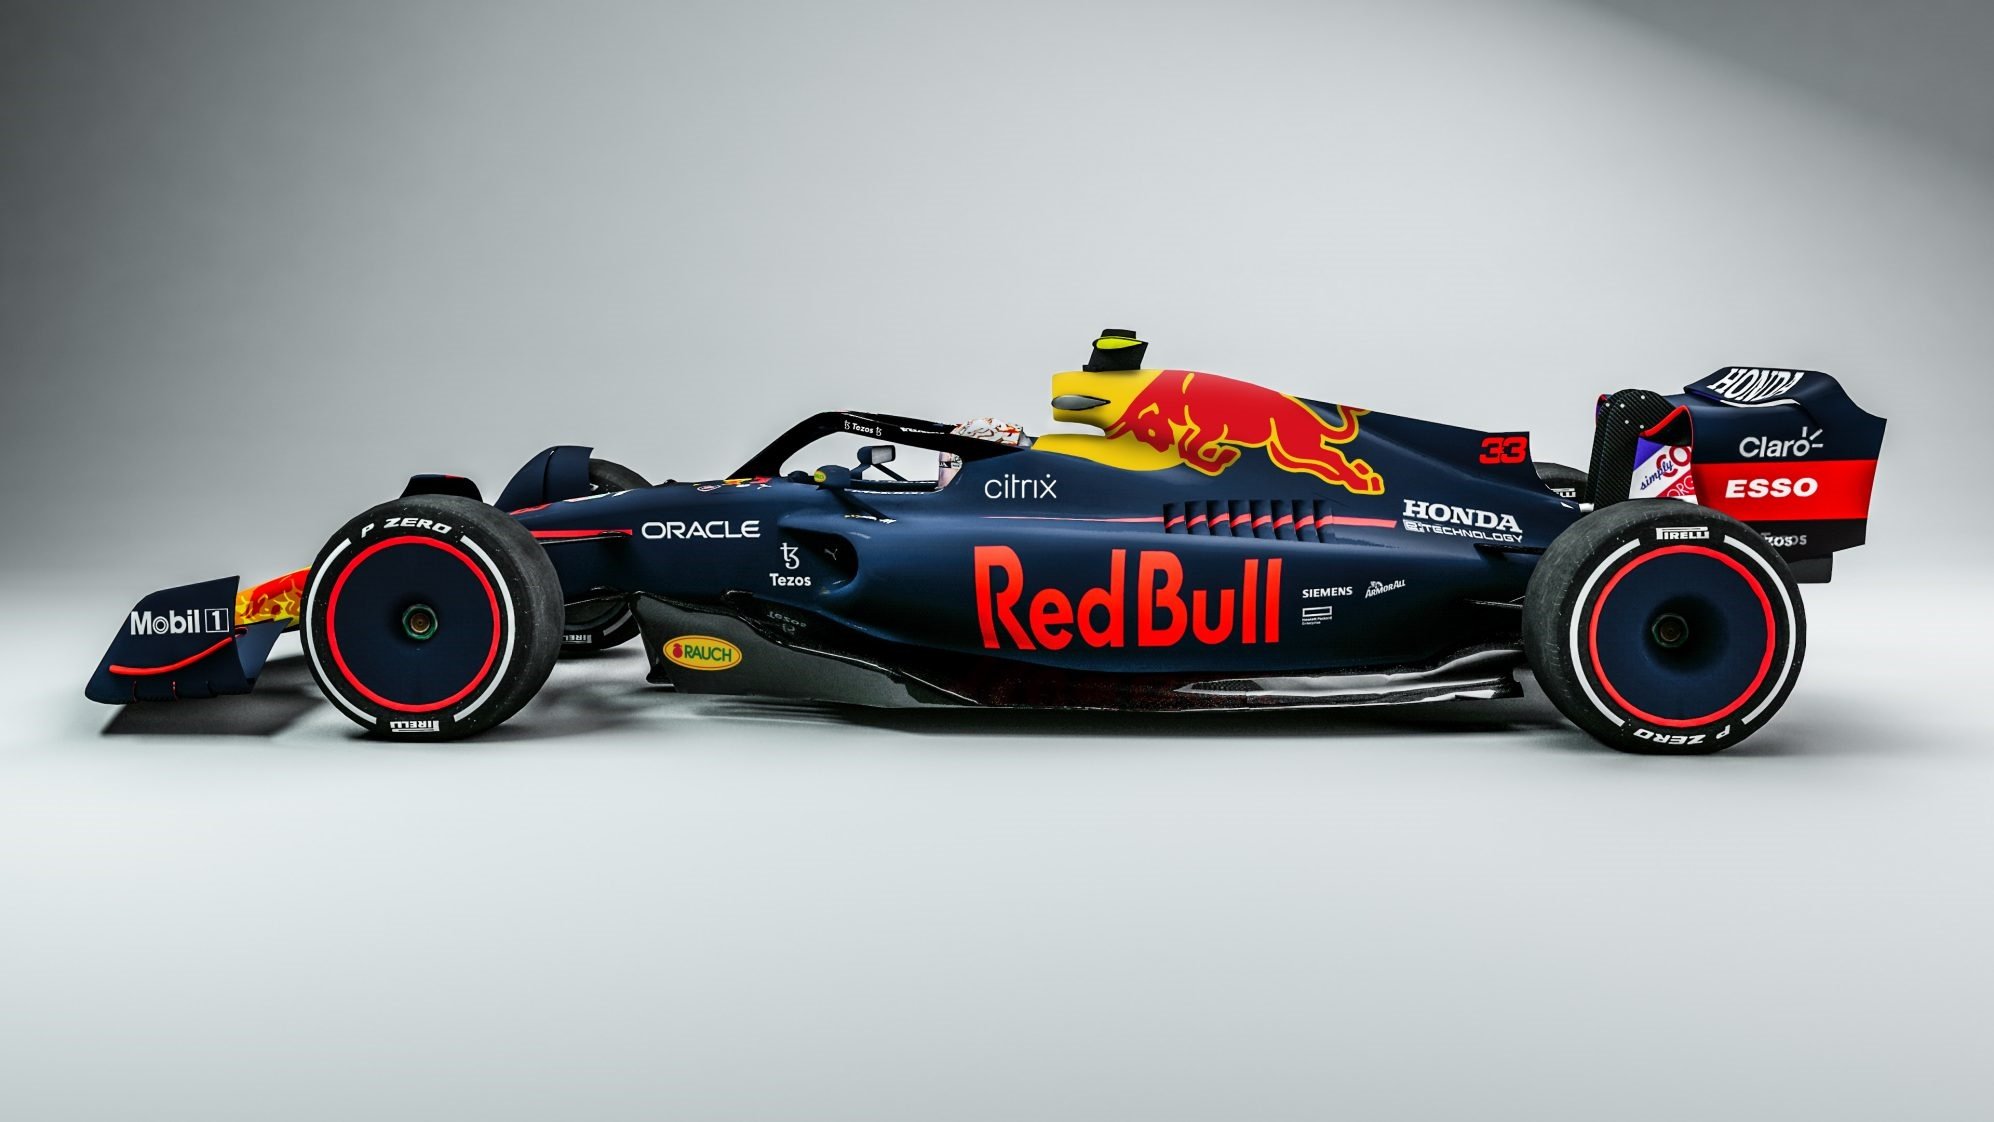 Red Bull Racing 2022 Formula One World Championship, Red Bull Racing, Race Car, F1 2022 Gallery HD Wallpaper